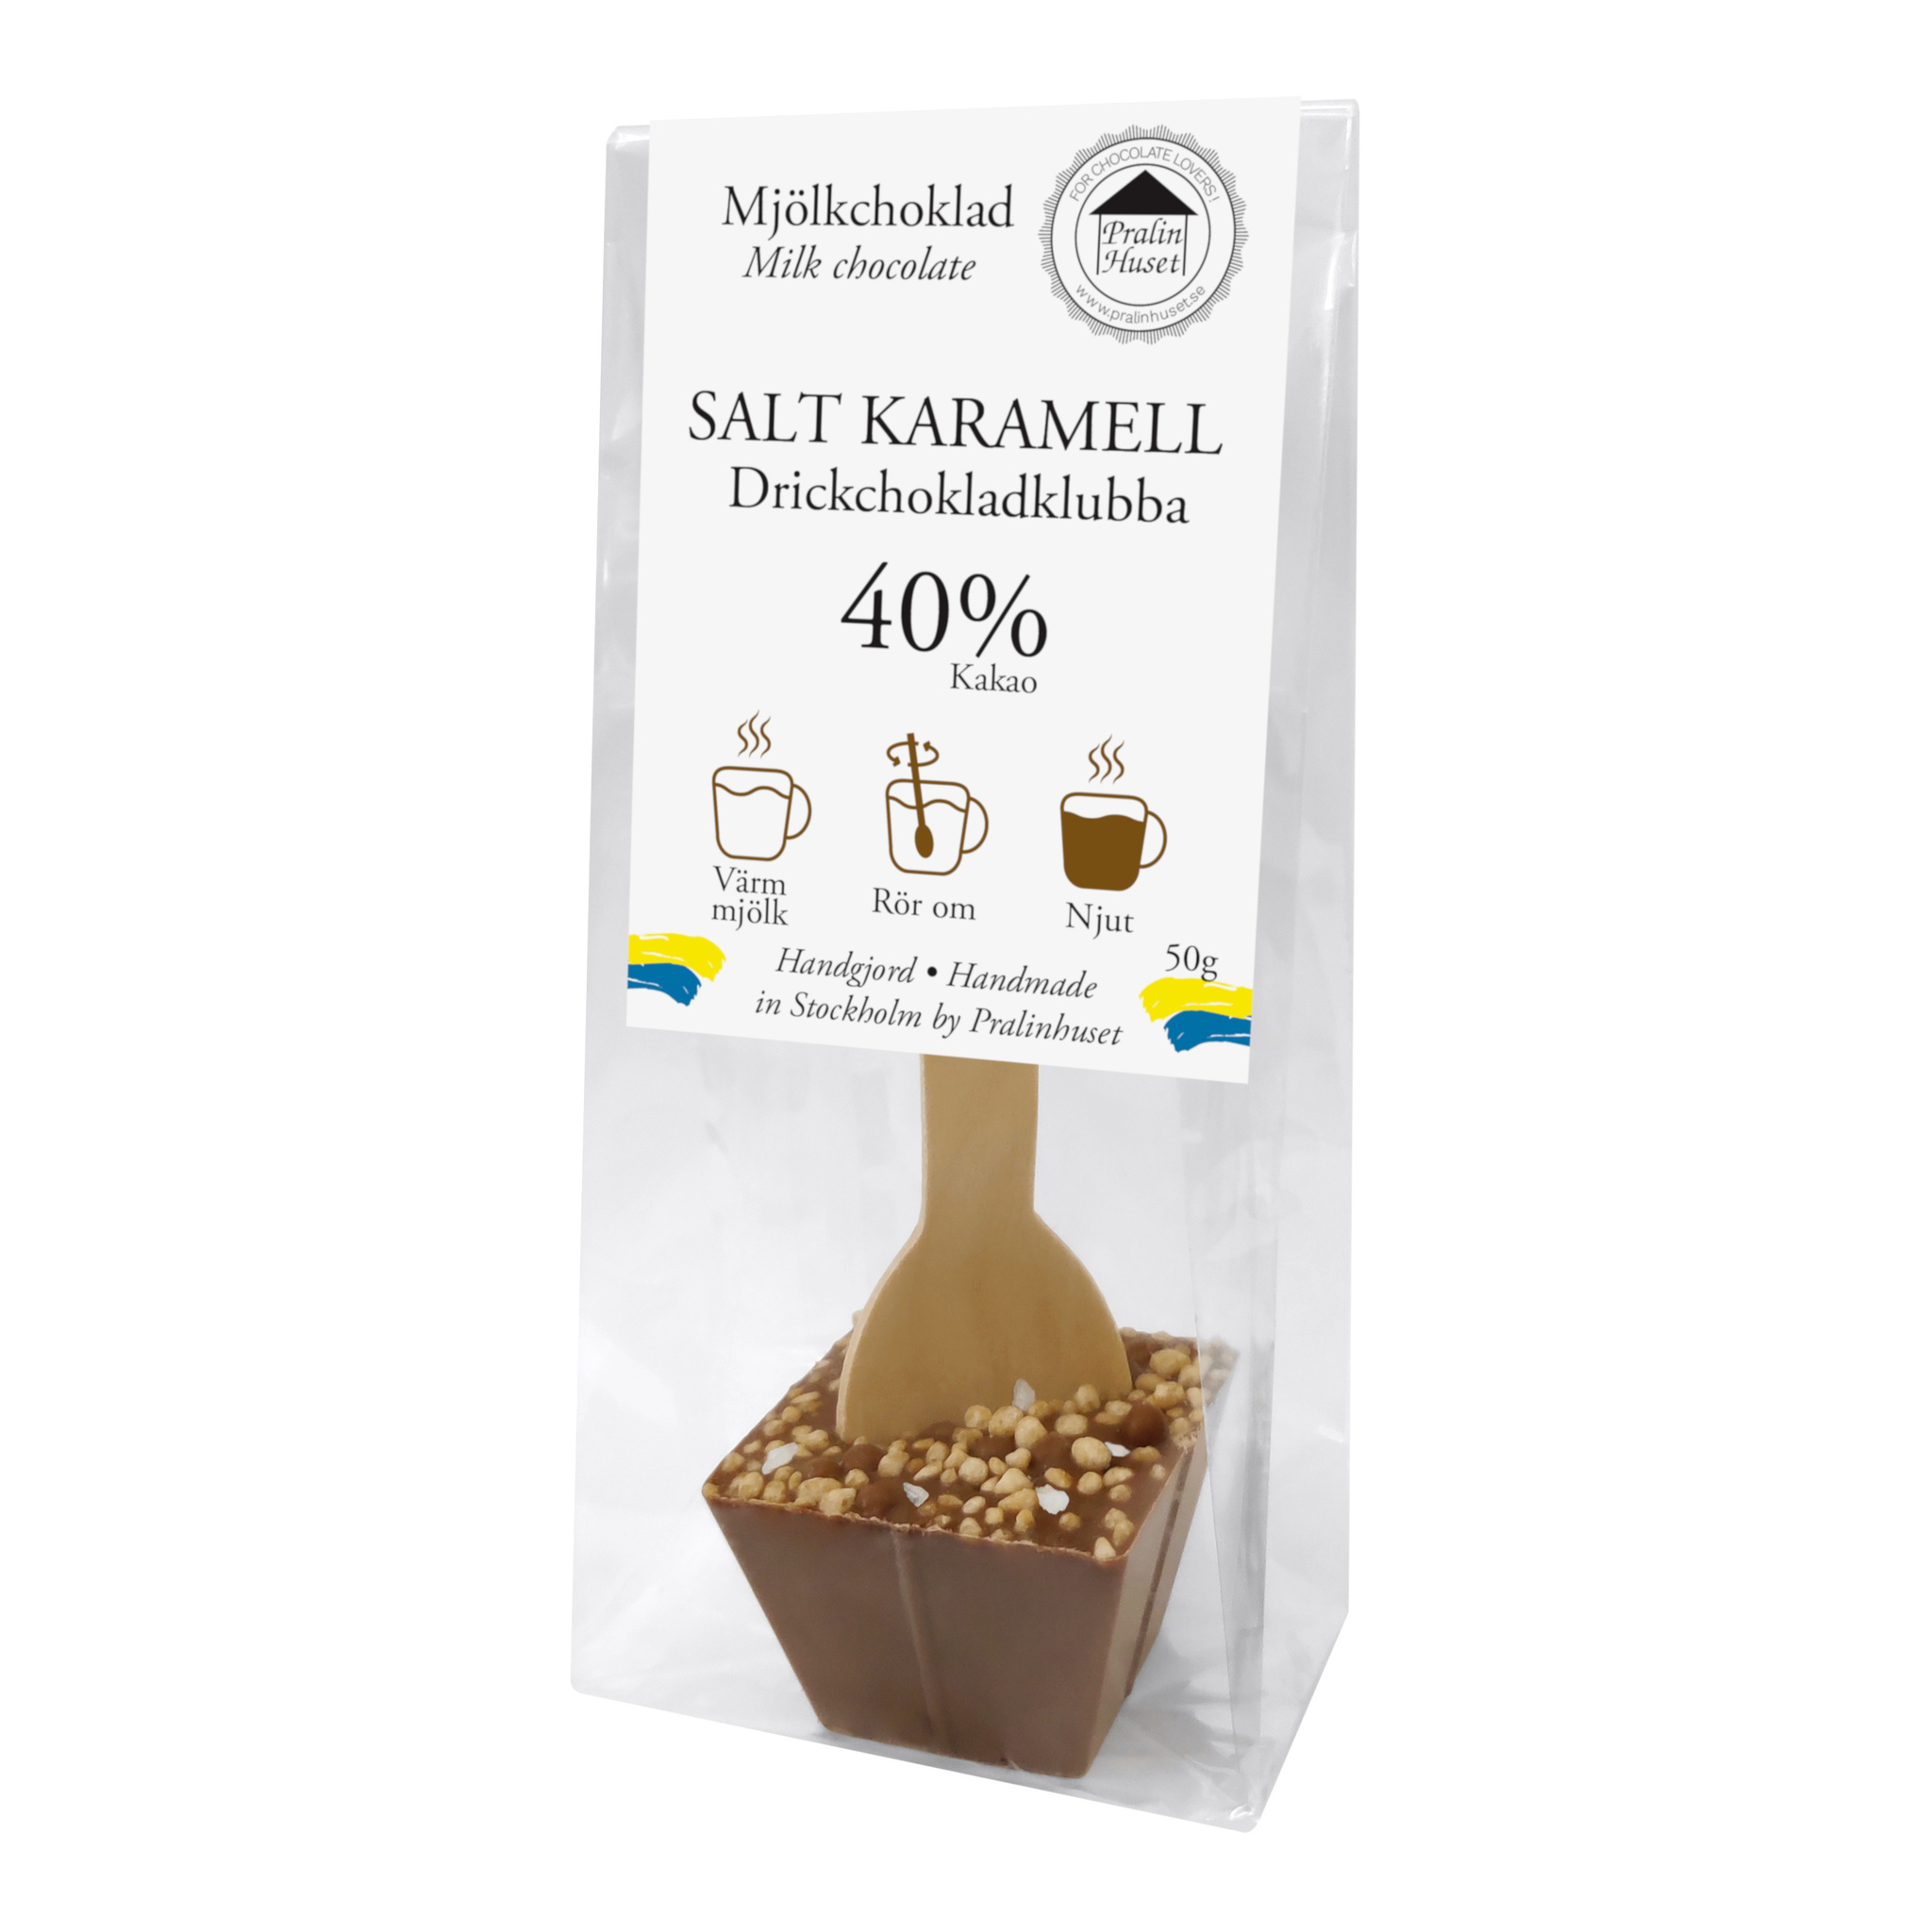 Pralinhuset - Drickchoklad - 40% Kakao - Salt Karamell & Krokantkrisp